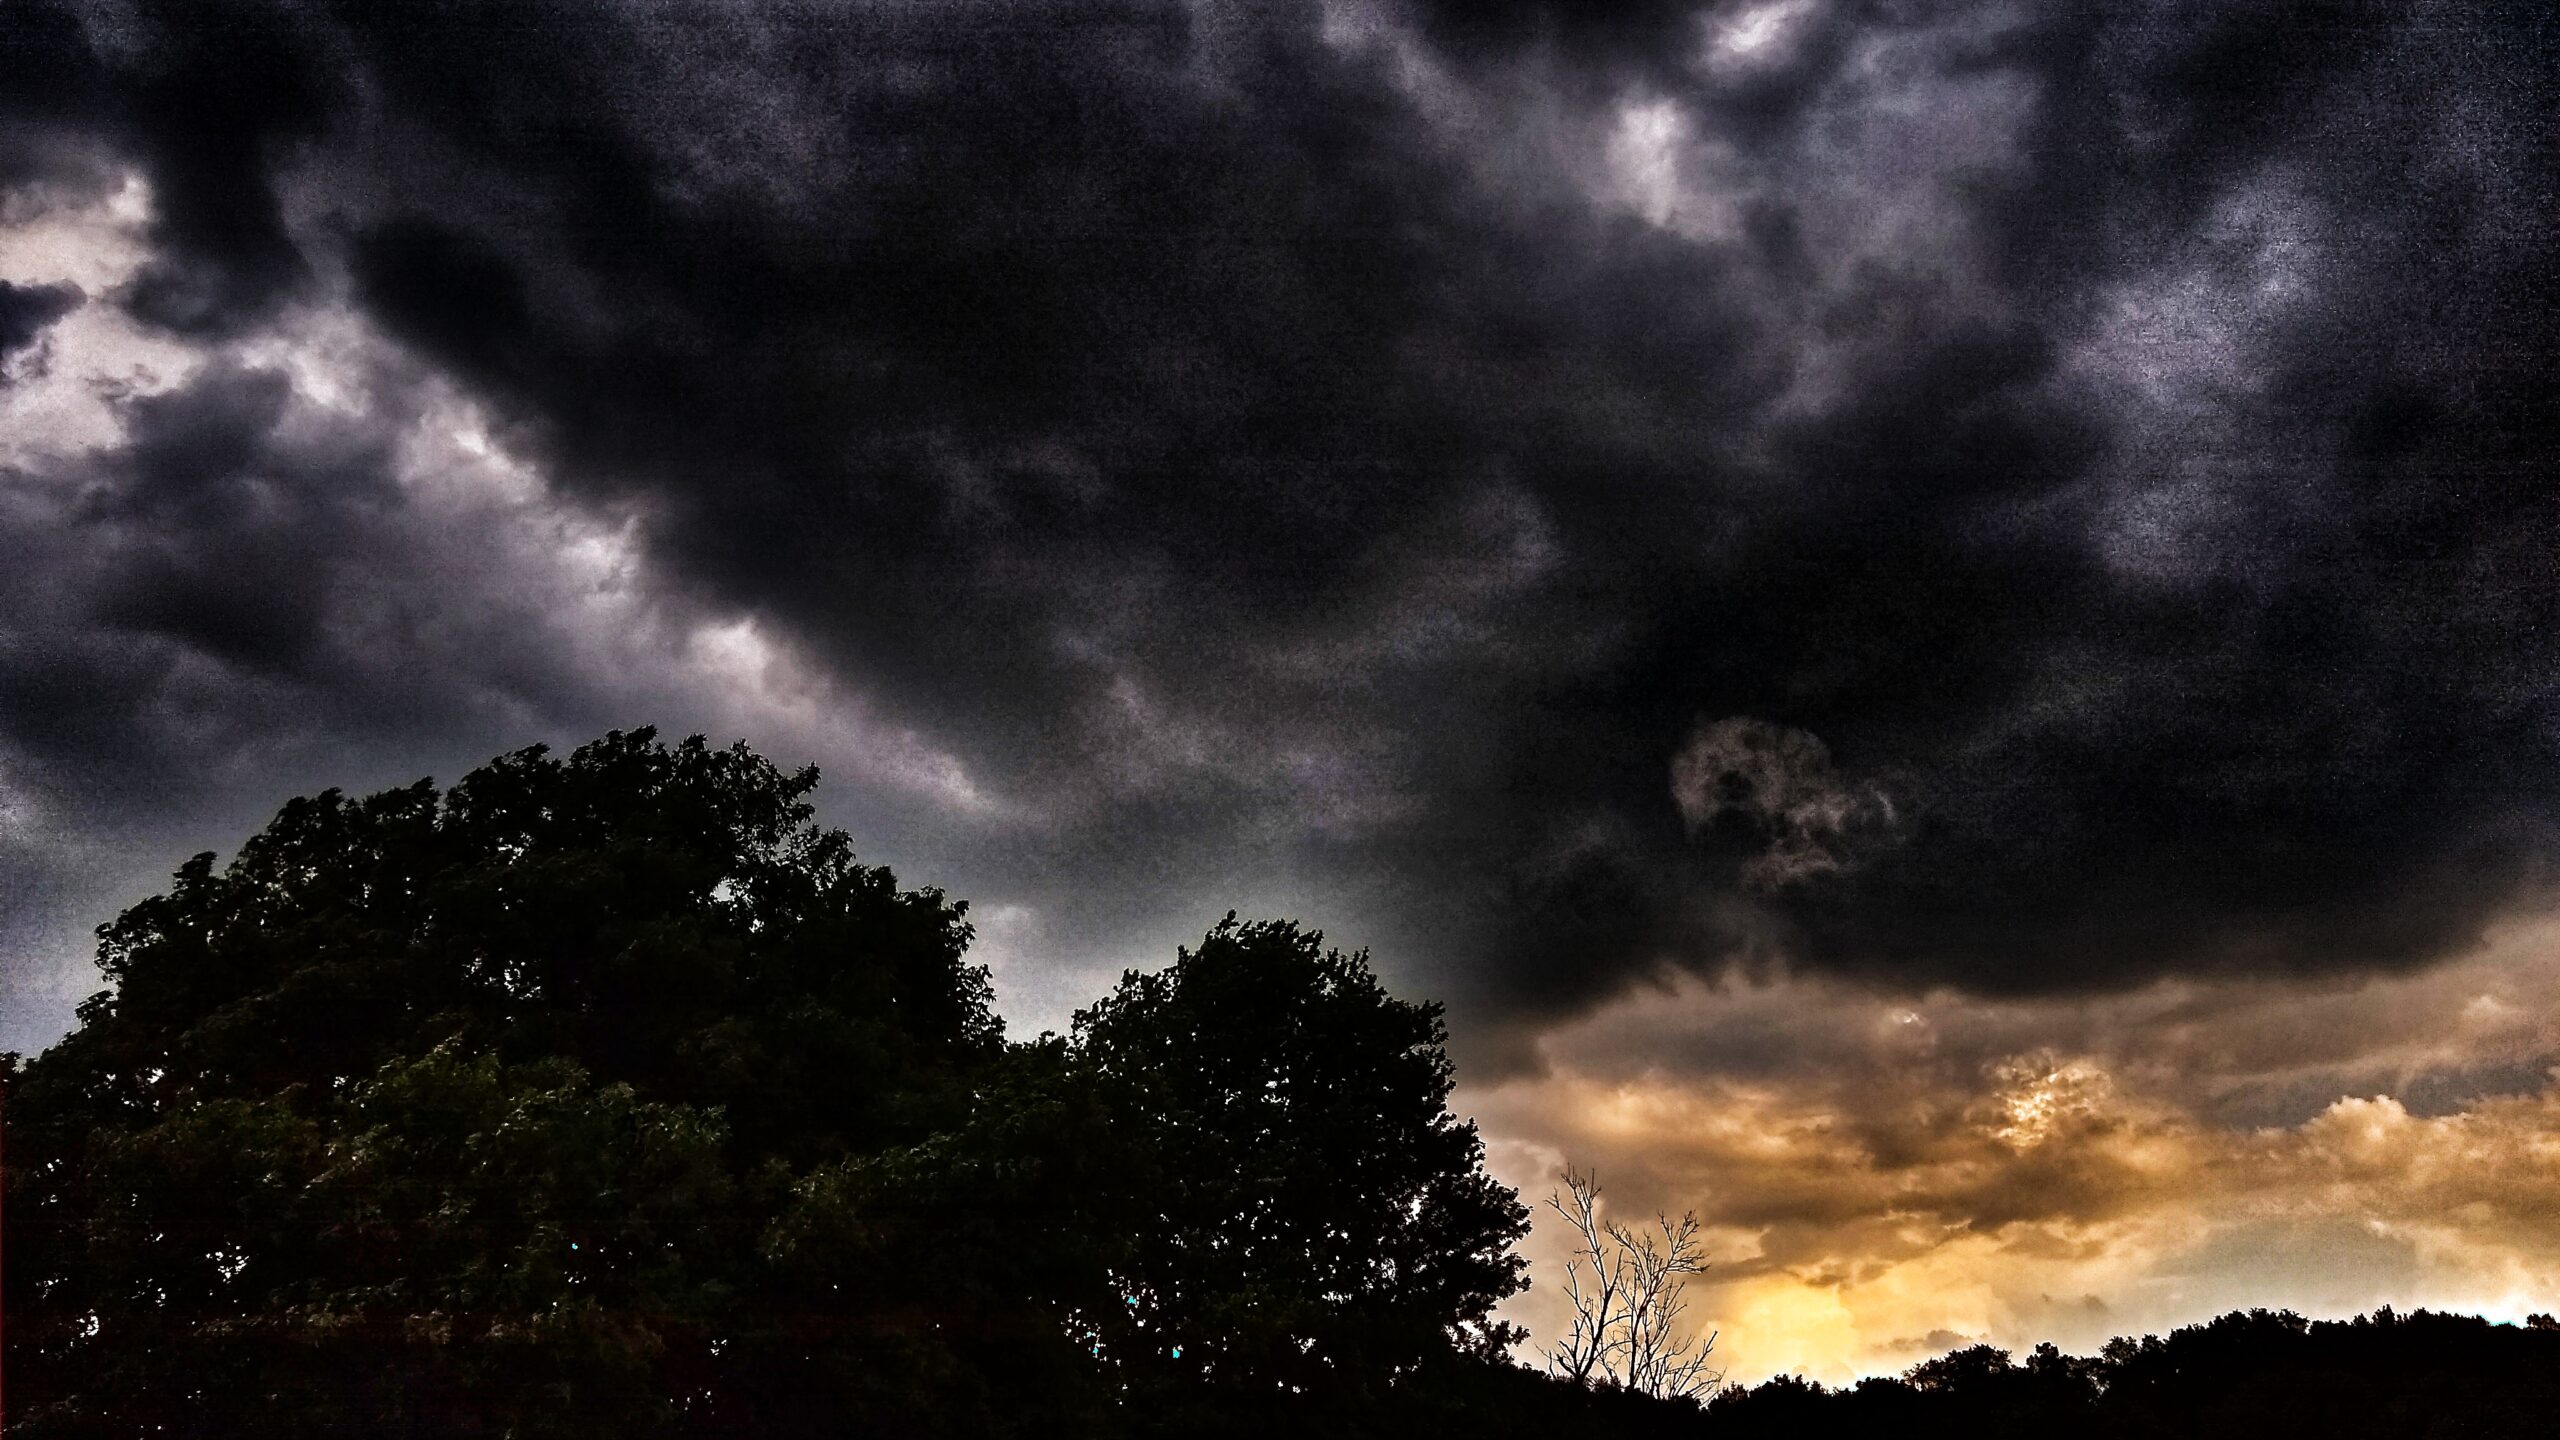 Dark storm clouds approaching